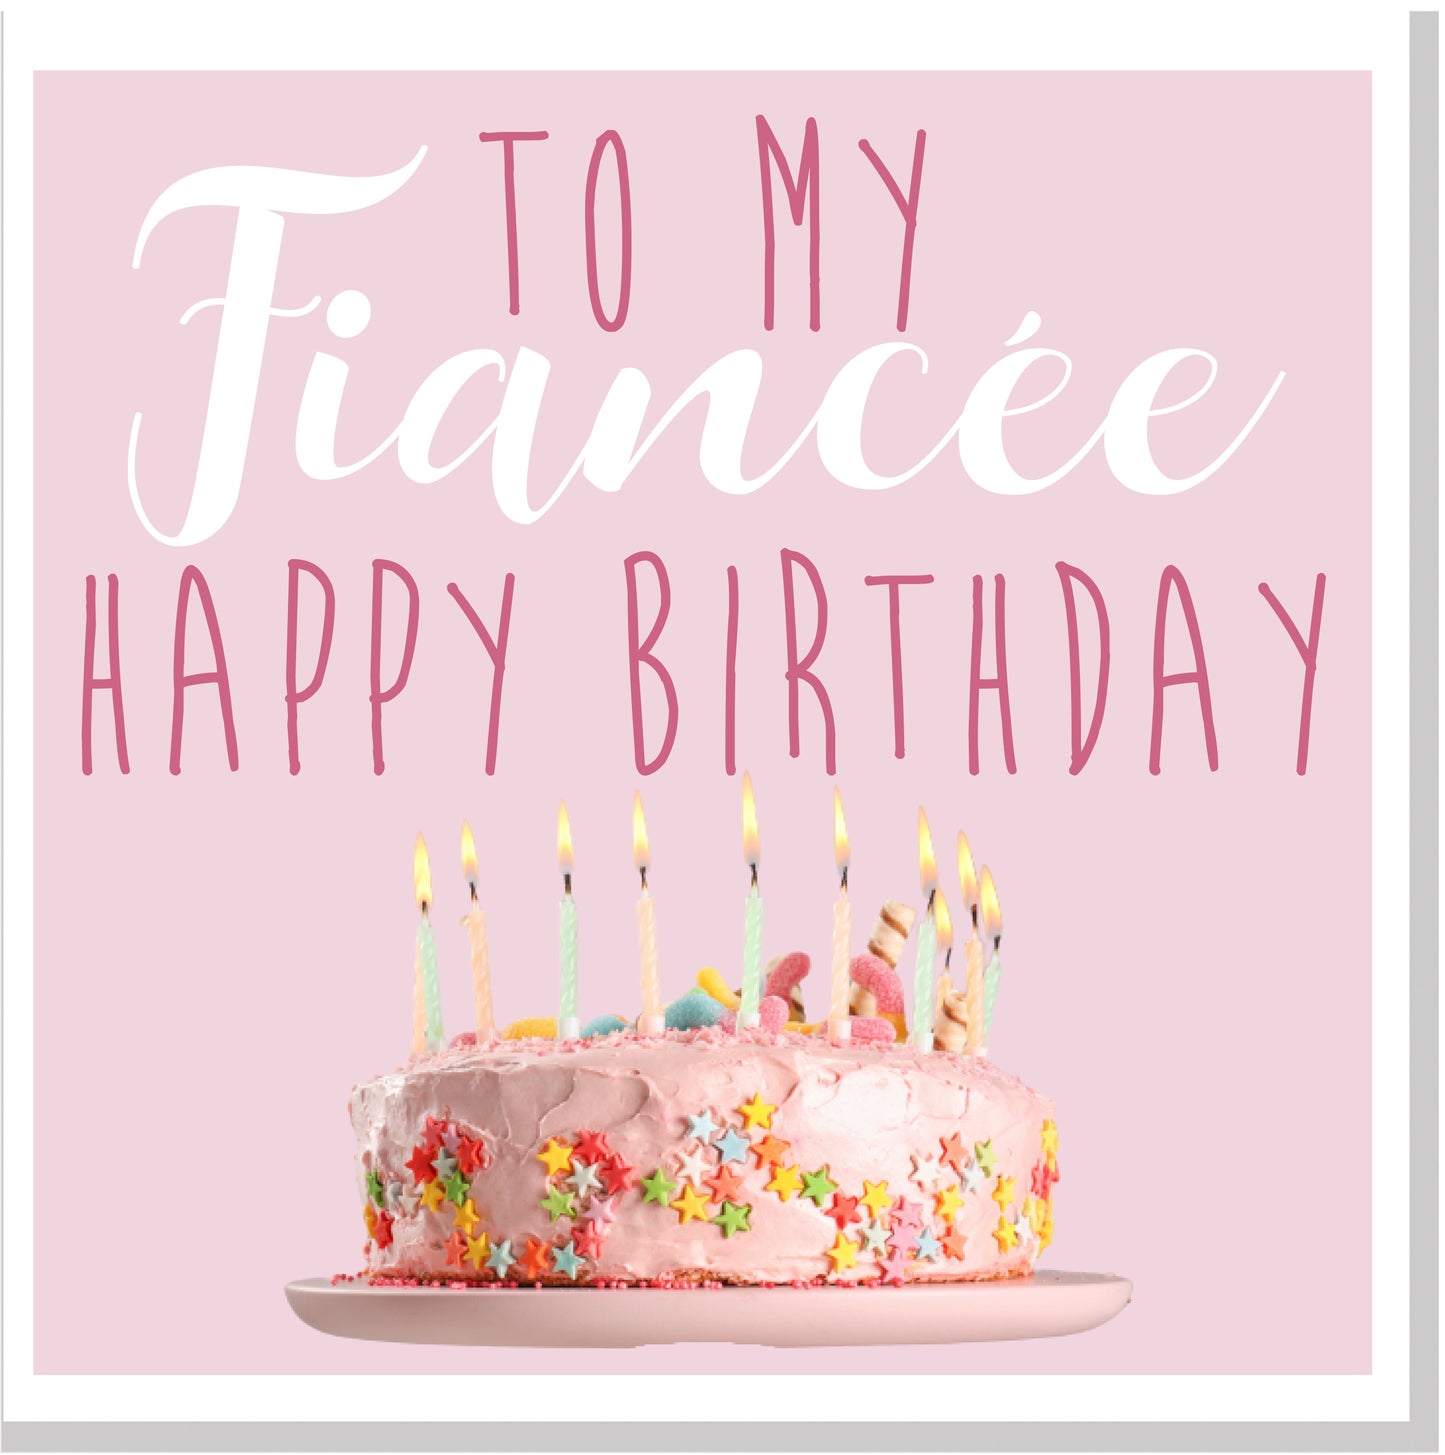 Fiancé/Fiancée Happy Birthday square card